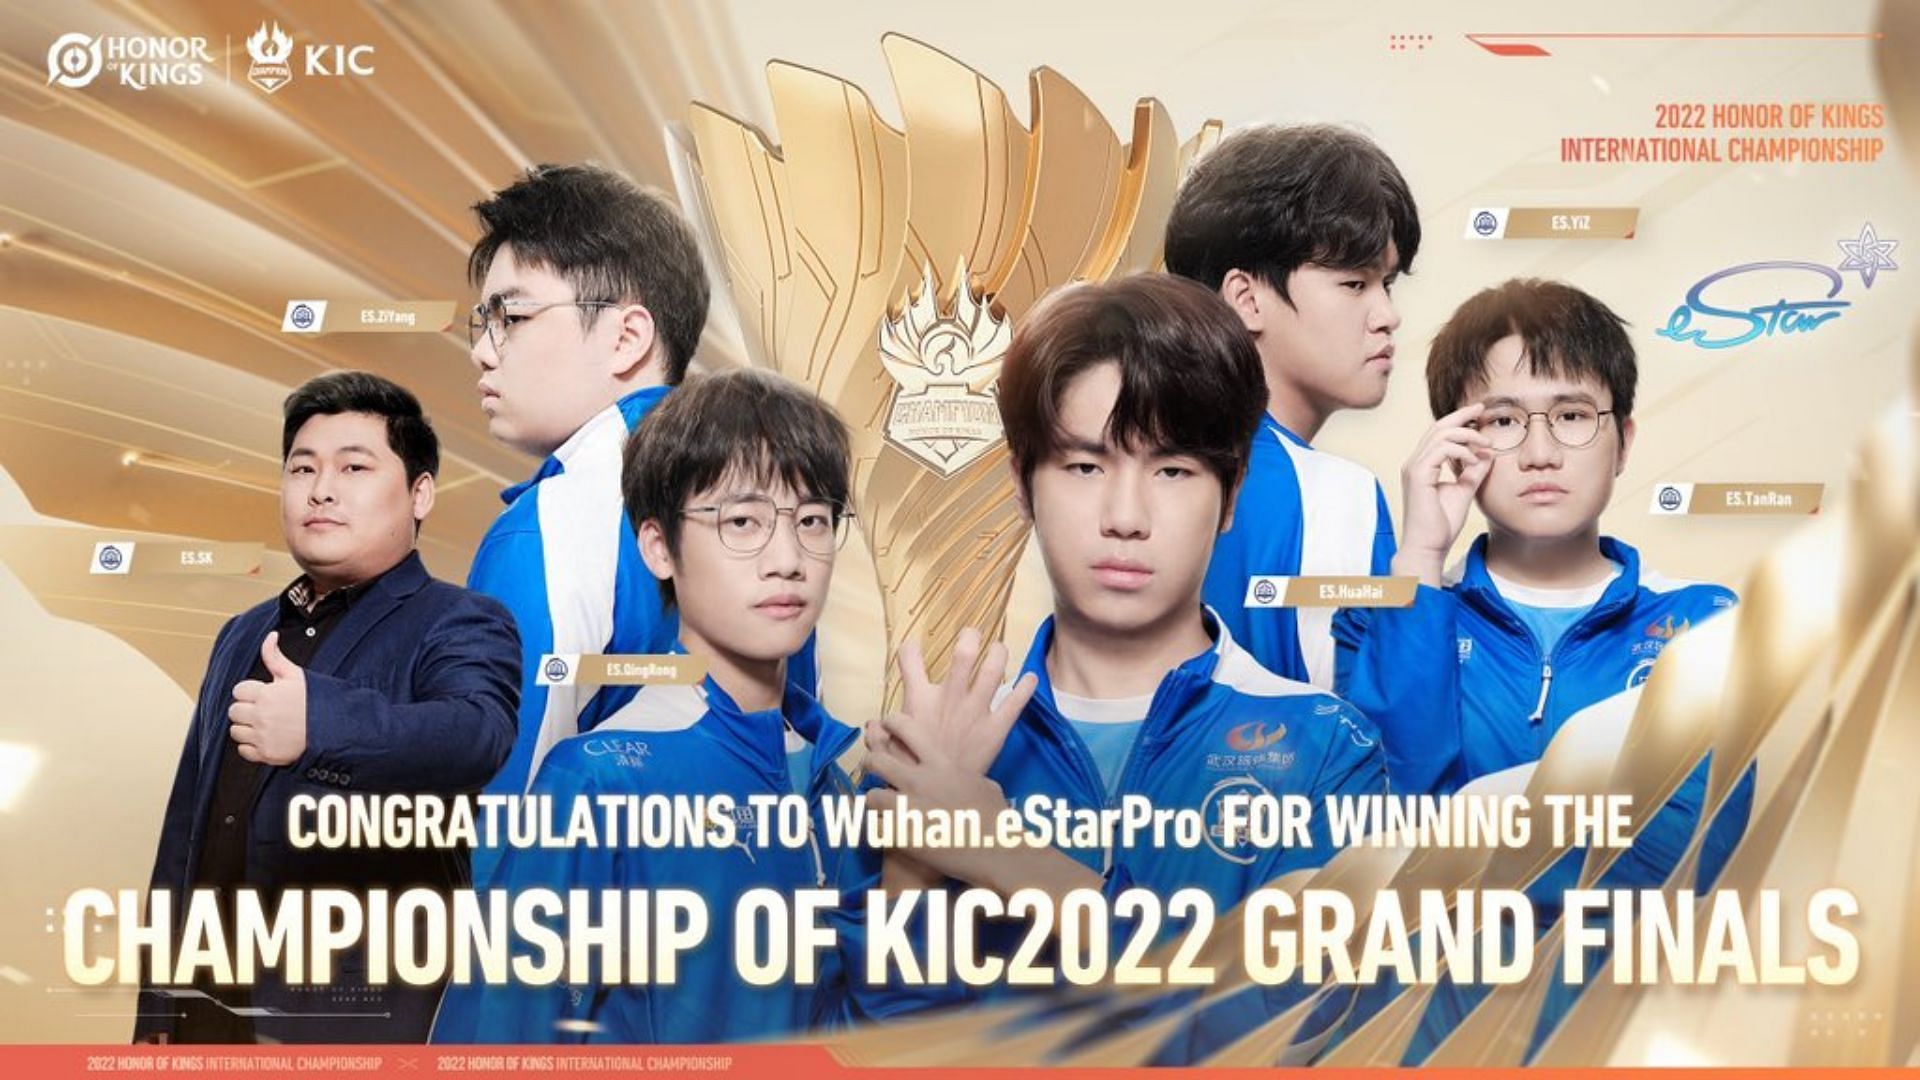 Wuhan.eStarPro wins Honor of Kings International Championship 2022